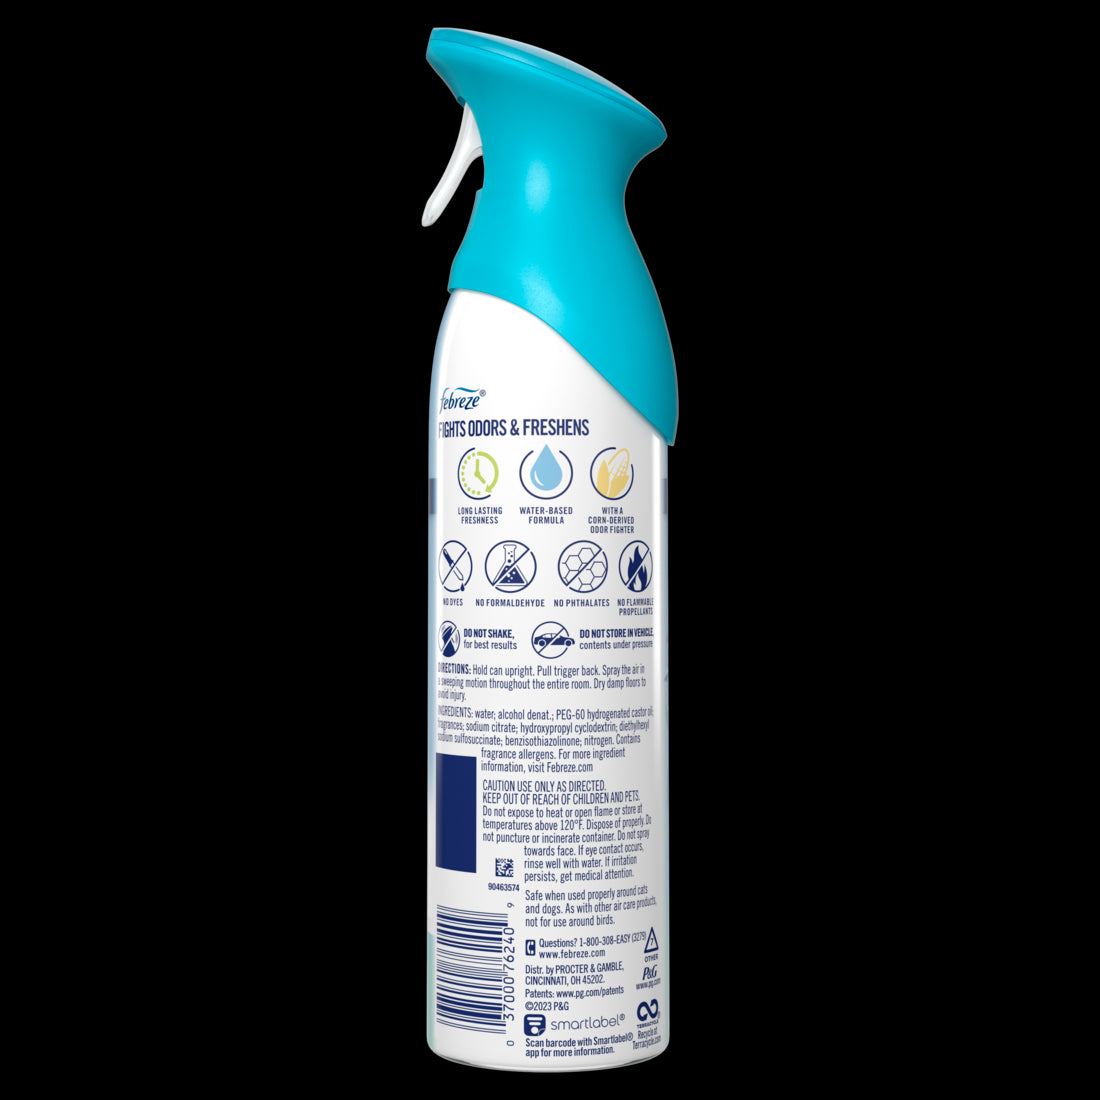 Febreze Odor-Eliminating Air Freshener with Gain Scent Honey Berry Hula - 8.8oz/6pk